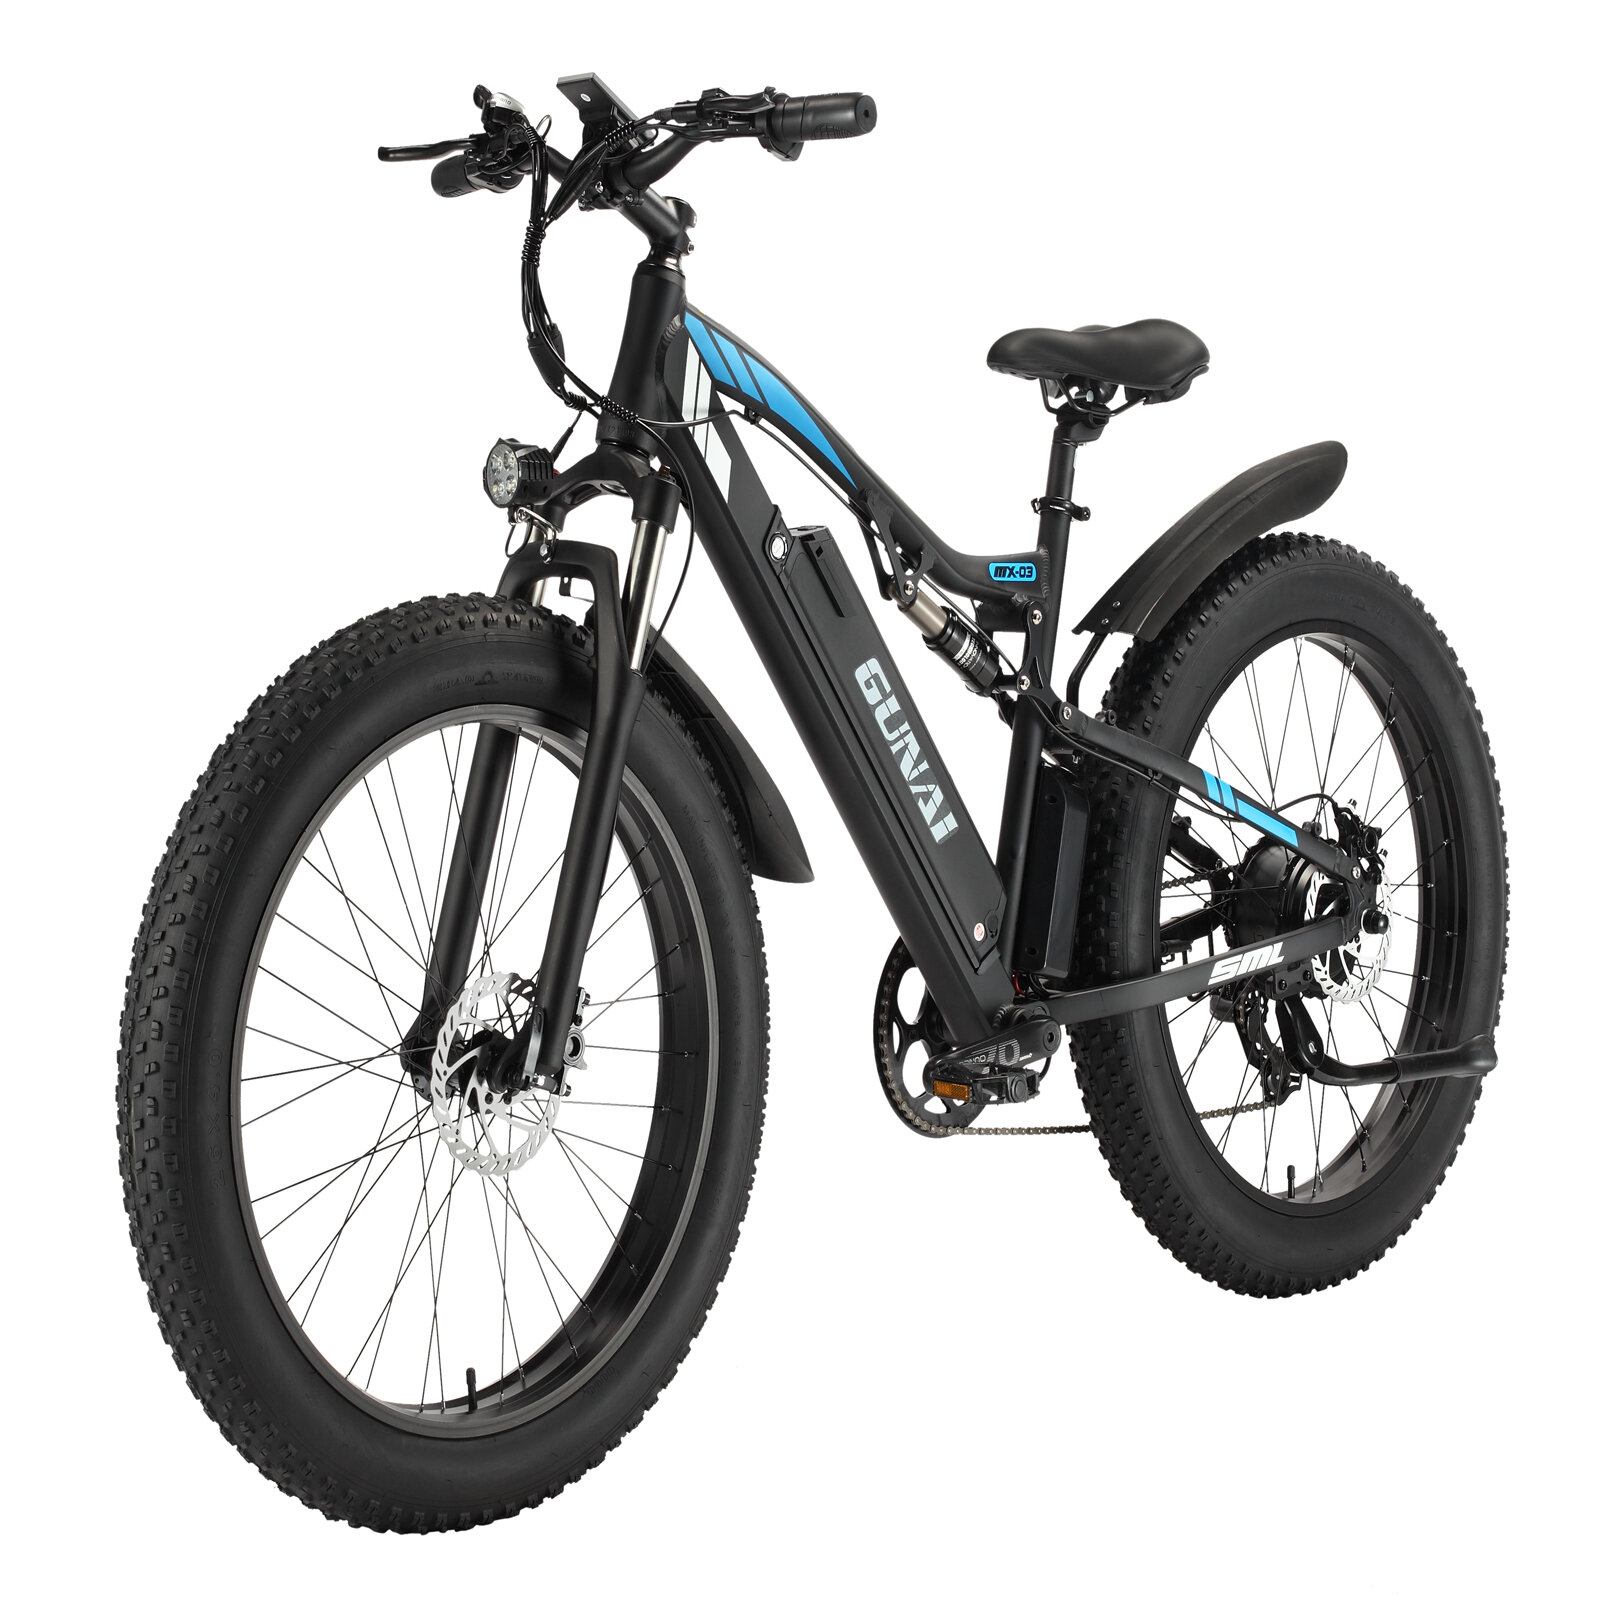 [EU DIRECT] GUNAI MX03 48V 17AH 1000W 26inch Electric Bicycle 40-50KM Mileage Range 150KG Max Load Electric Bike